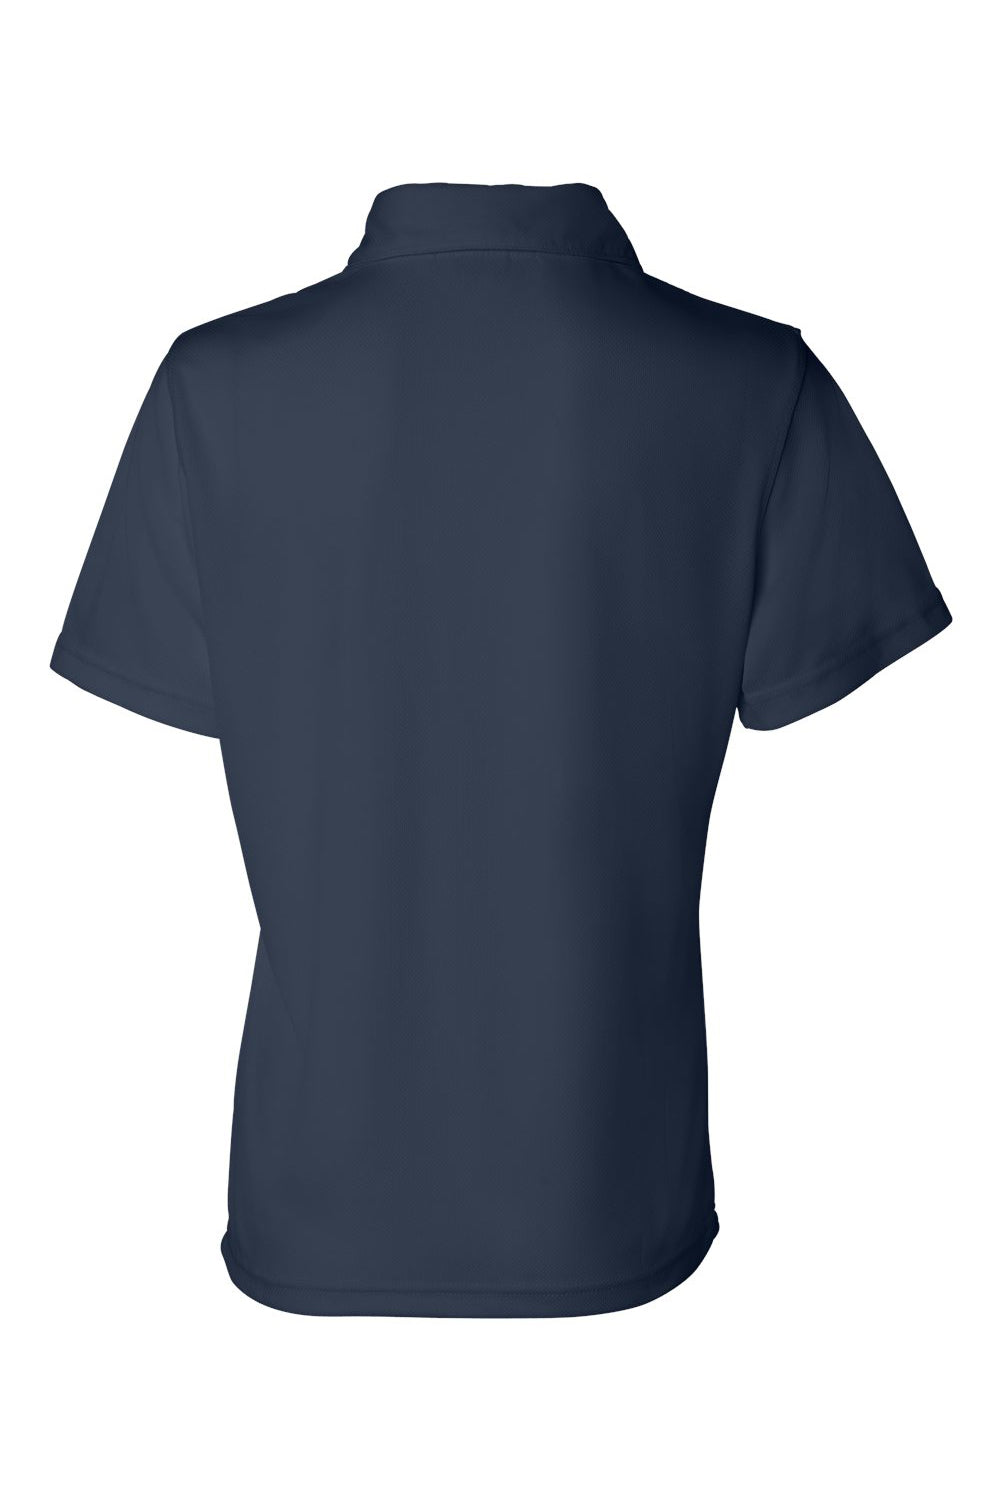 Sierra Pacific 5469 Womens Moisture Wicking Mesh Short Sleeve Polo Shirt Navy Blue Flat Back